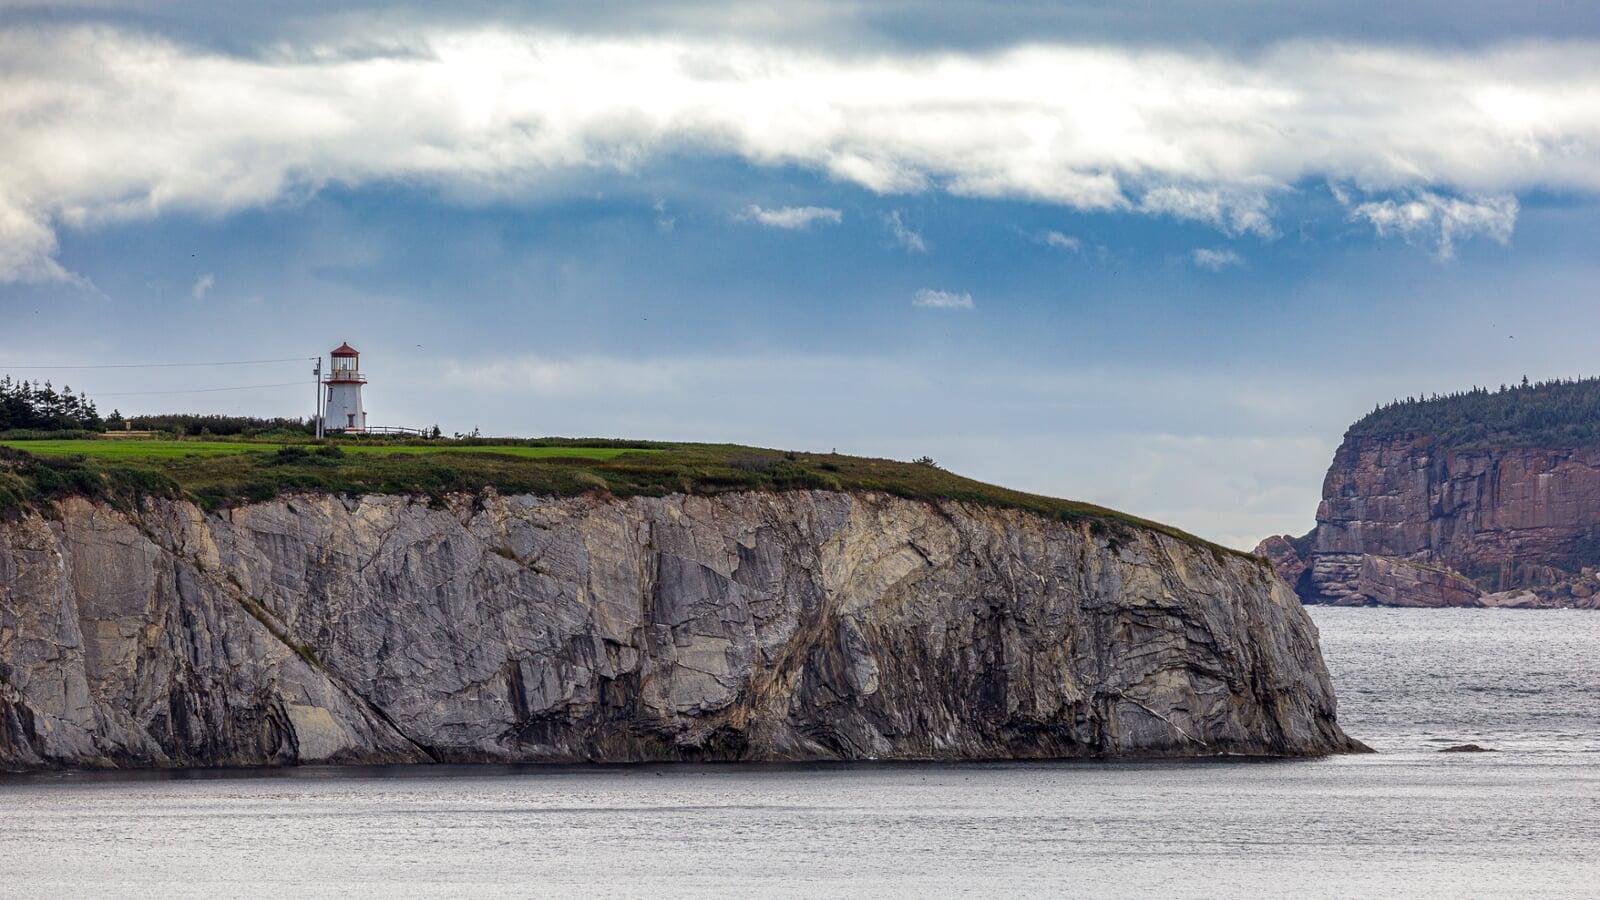 Cap Blanc lighthouse in Gaspesie, Quebec, Canada